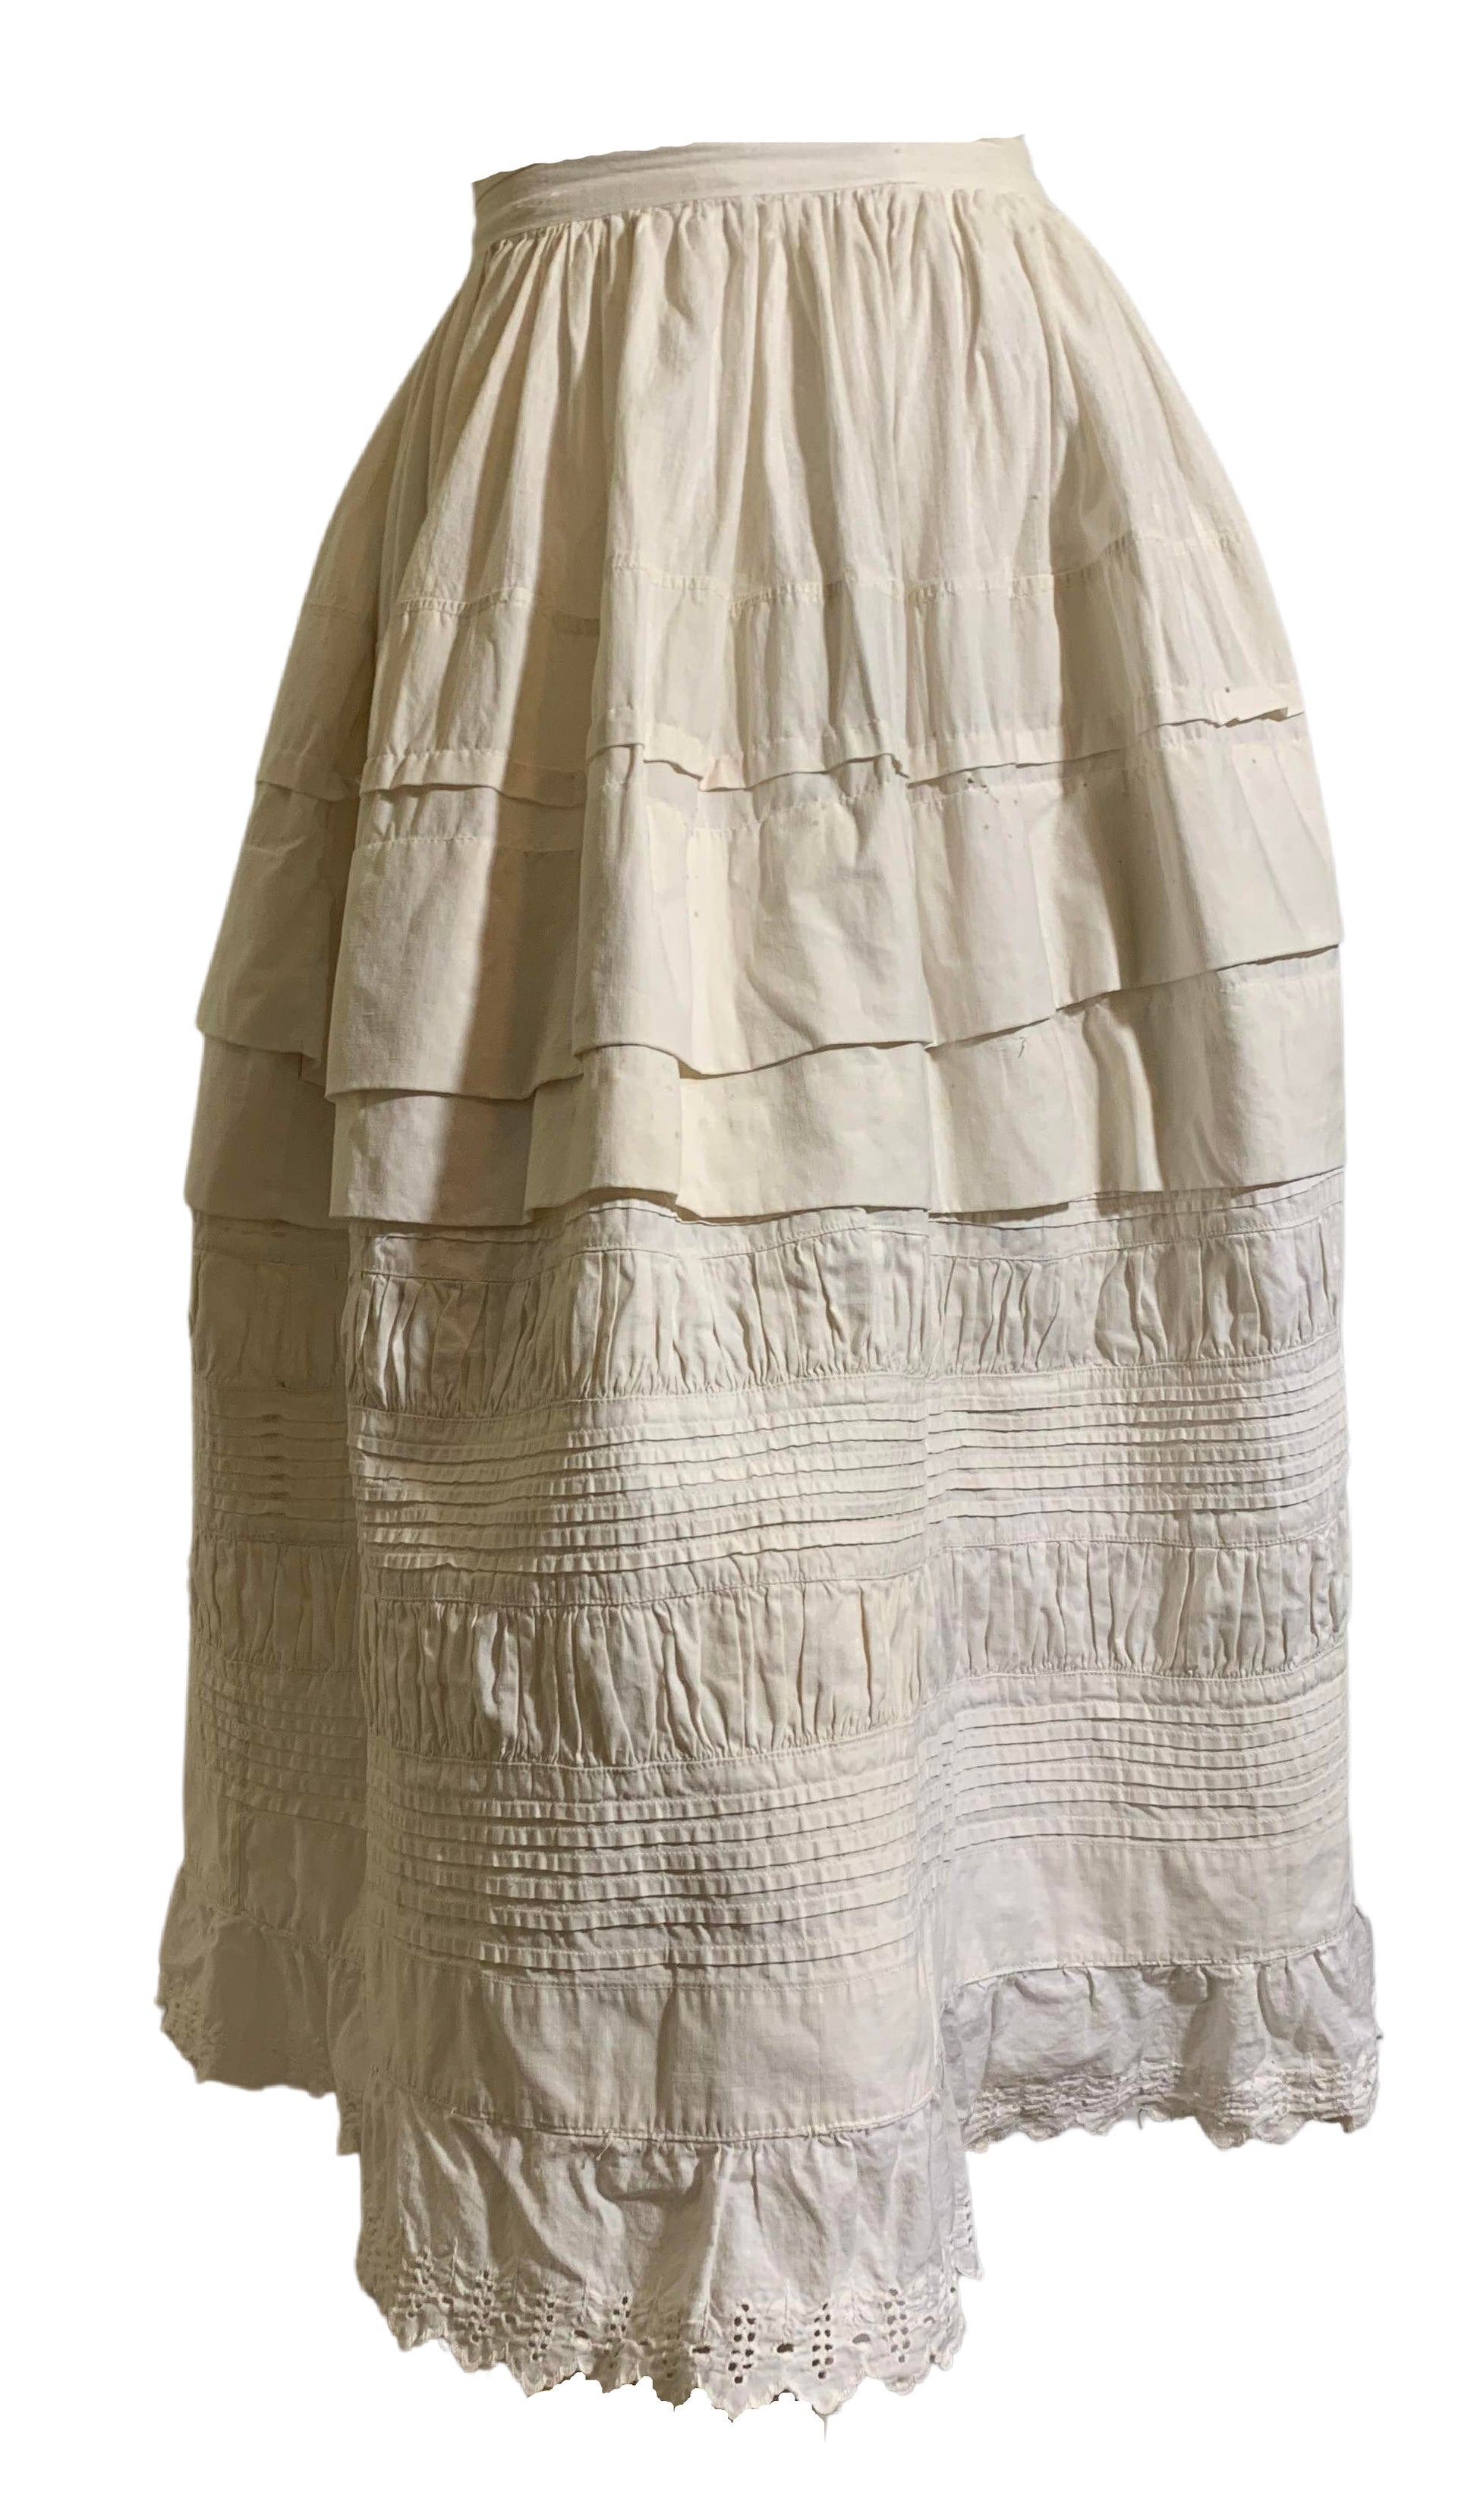 Ruffled and Embroidered Short White Cotton Petticoat circa 1890s –  Dorothea's Closet Vintage